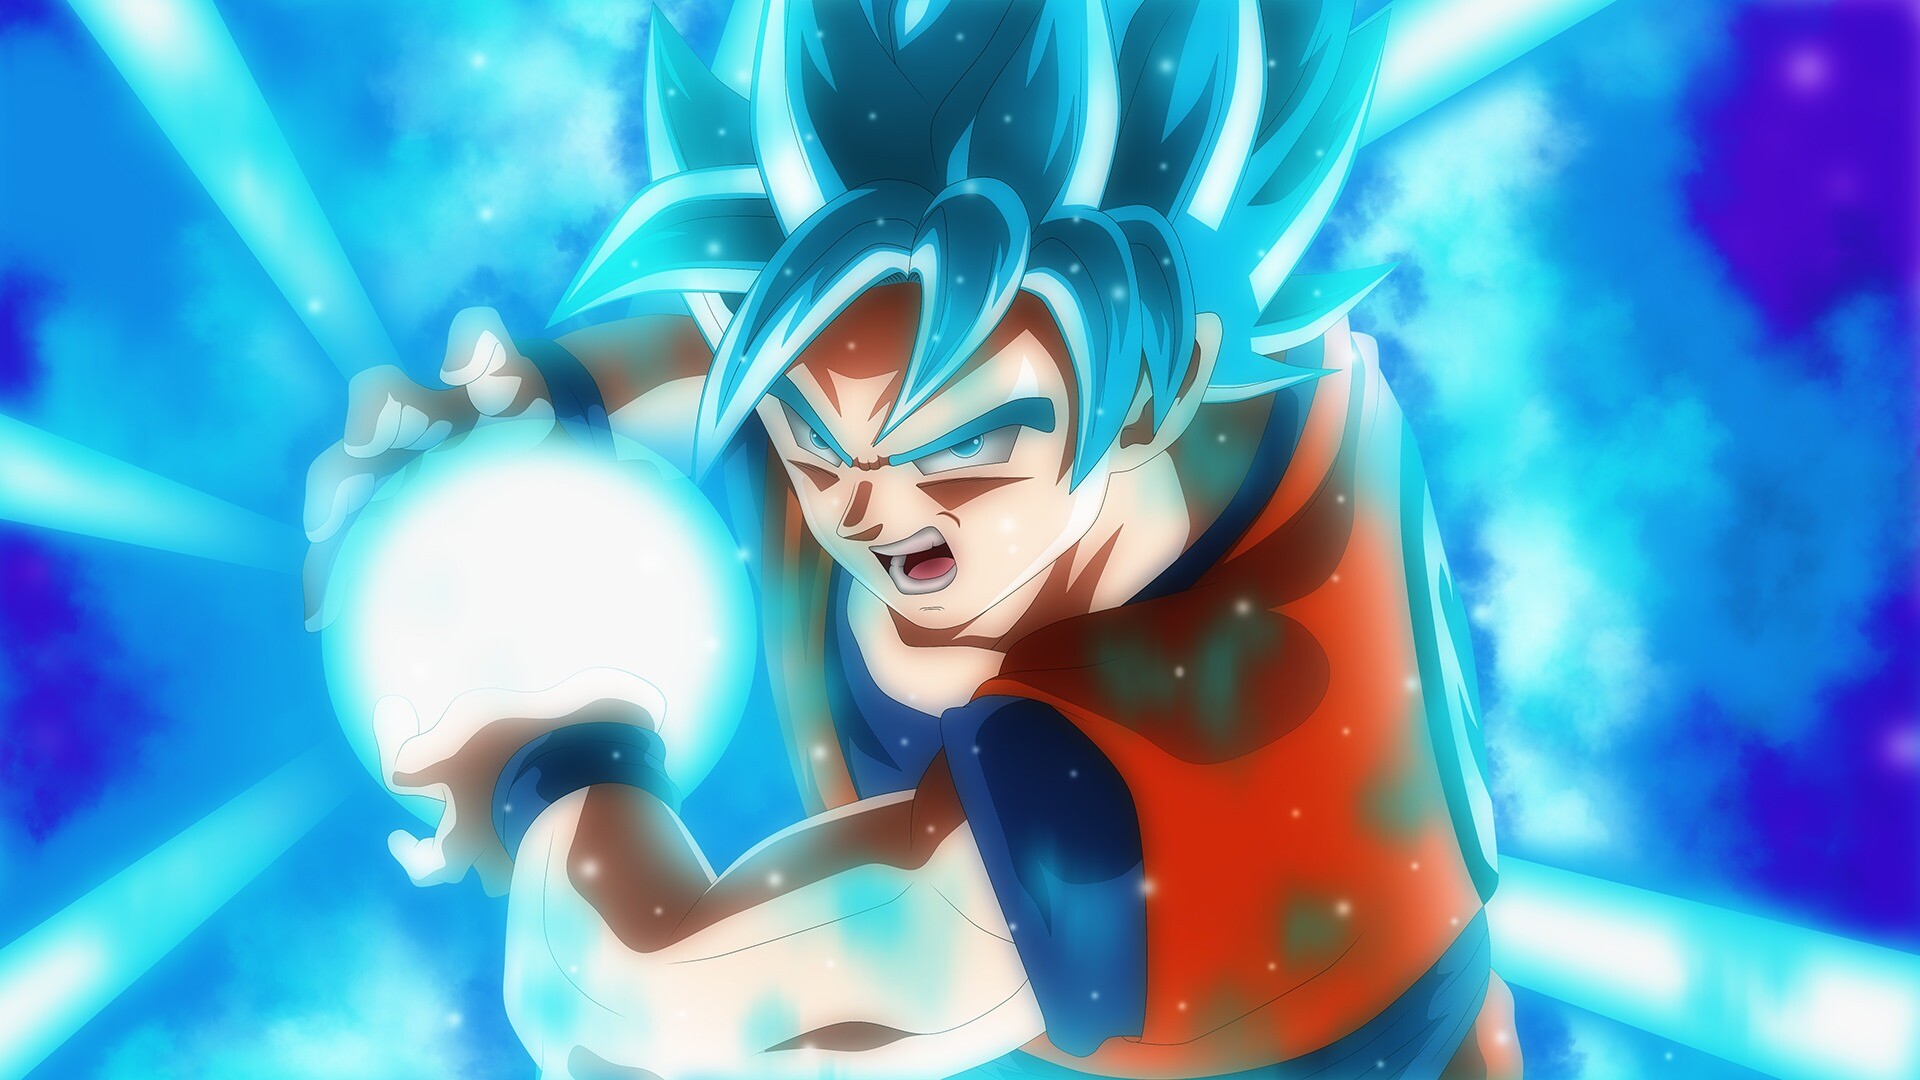 Goku Kamehameha: "Turtle Shockwave", Energy blast created in the anime/manga Dragon Ball. 1920x1080 Full HD Background.